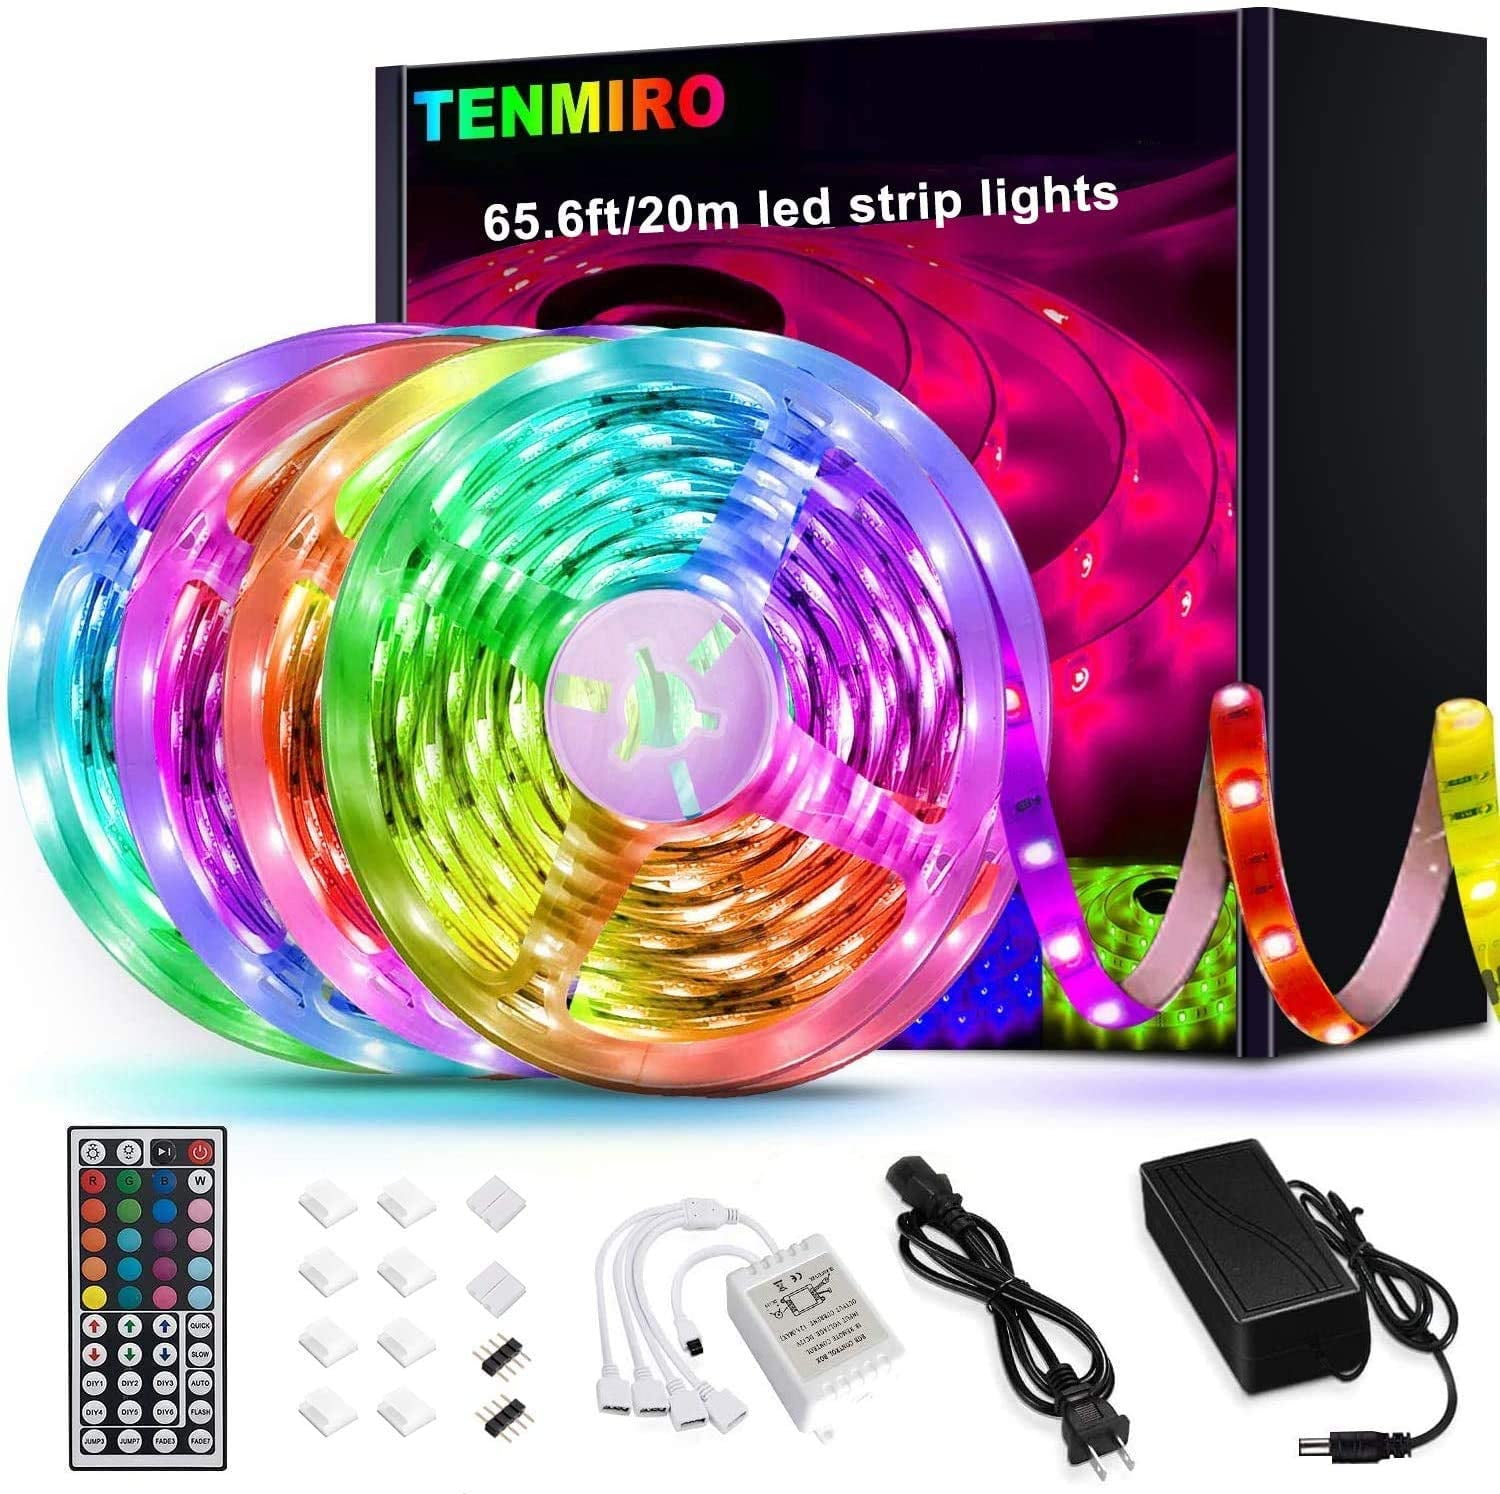 De Verkeersopstopping tempo LED strip light Changing Light Strip With Remote Control 20M - Walmart.com